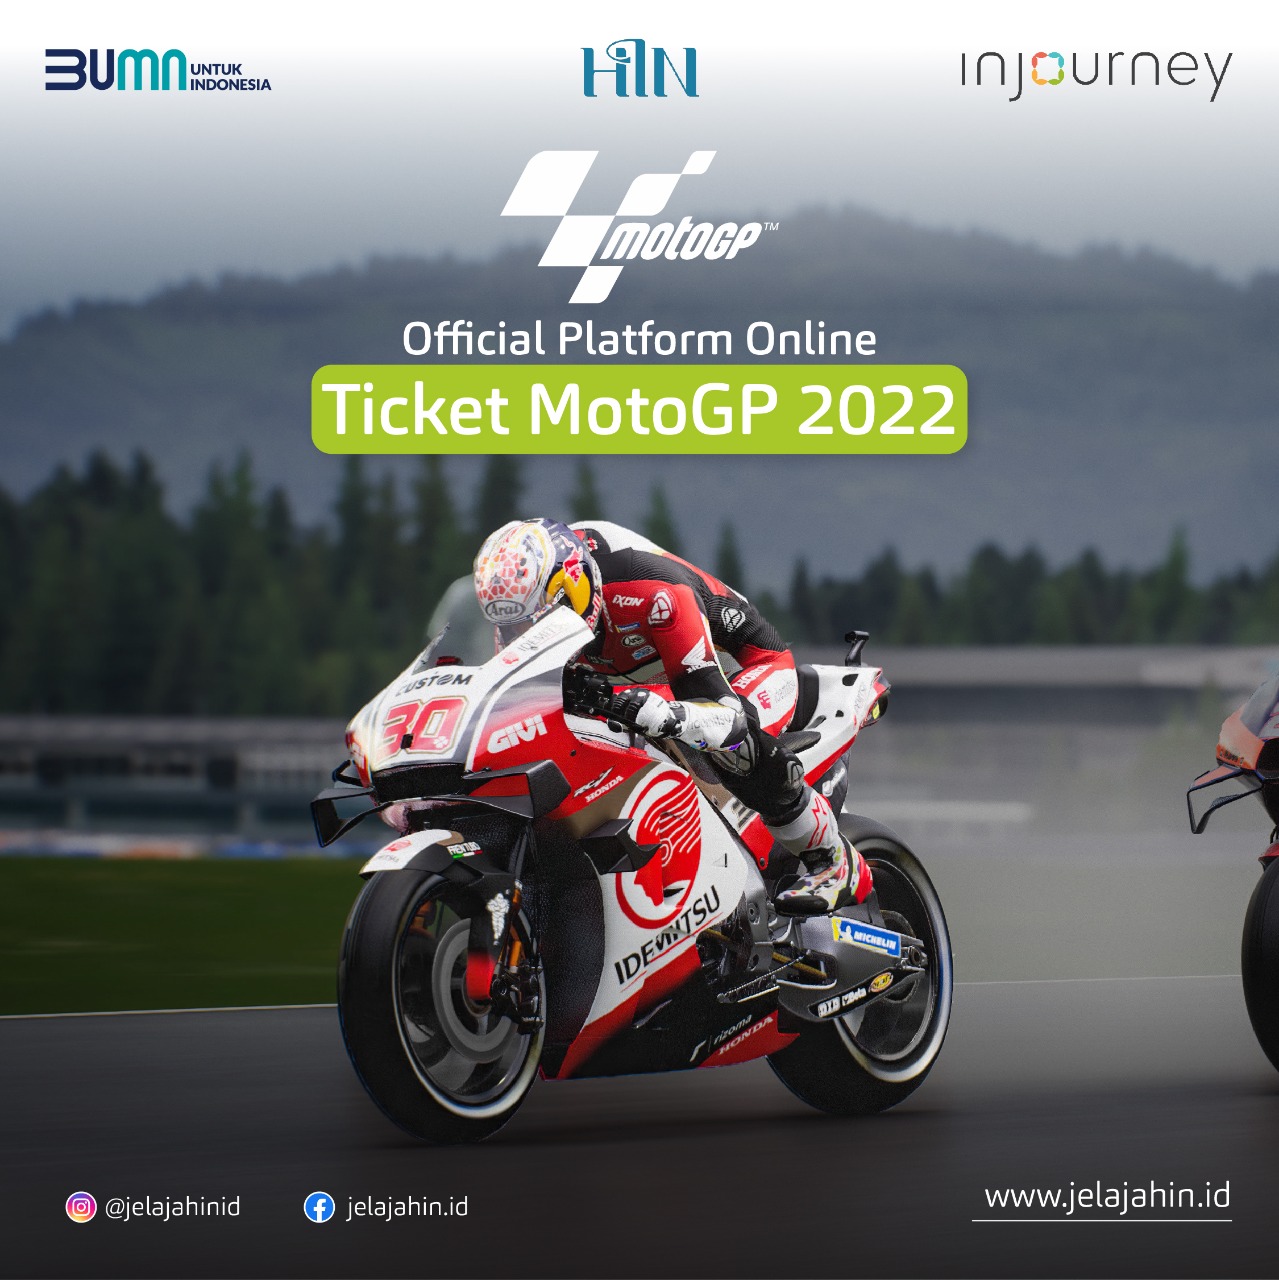 Jelang MotoGP 2022 Mandalika, PT Hotel Indonesia Natour Siapkan Paket  Bundling dan Alternative Akomodasi